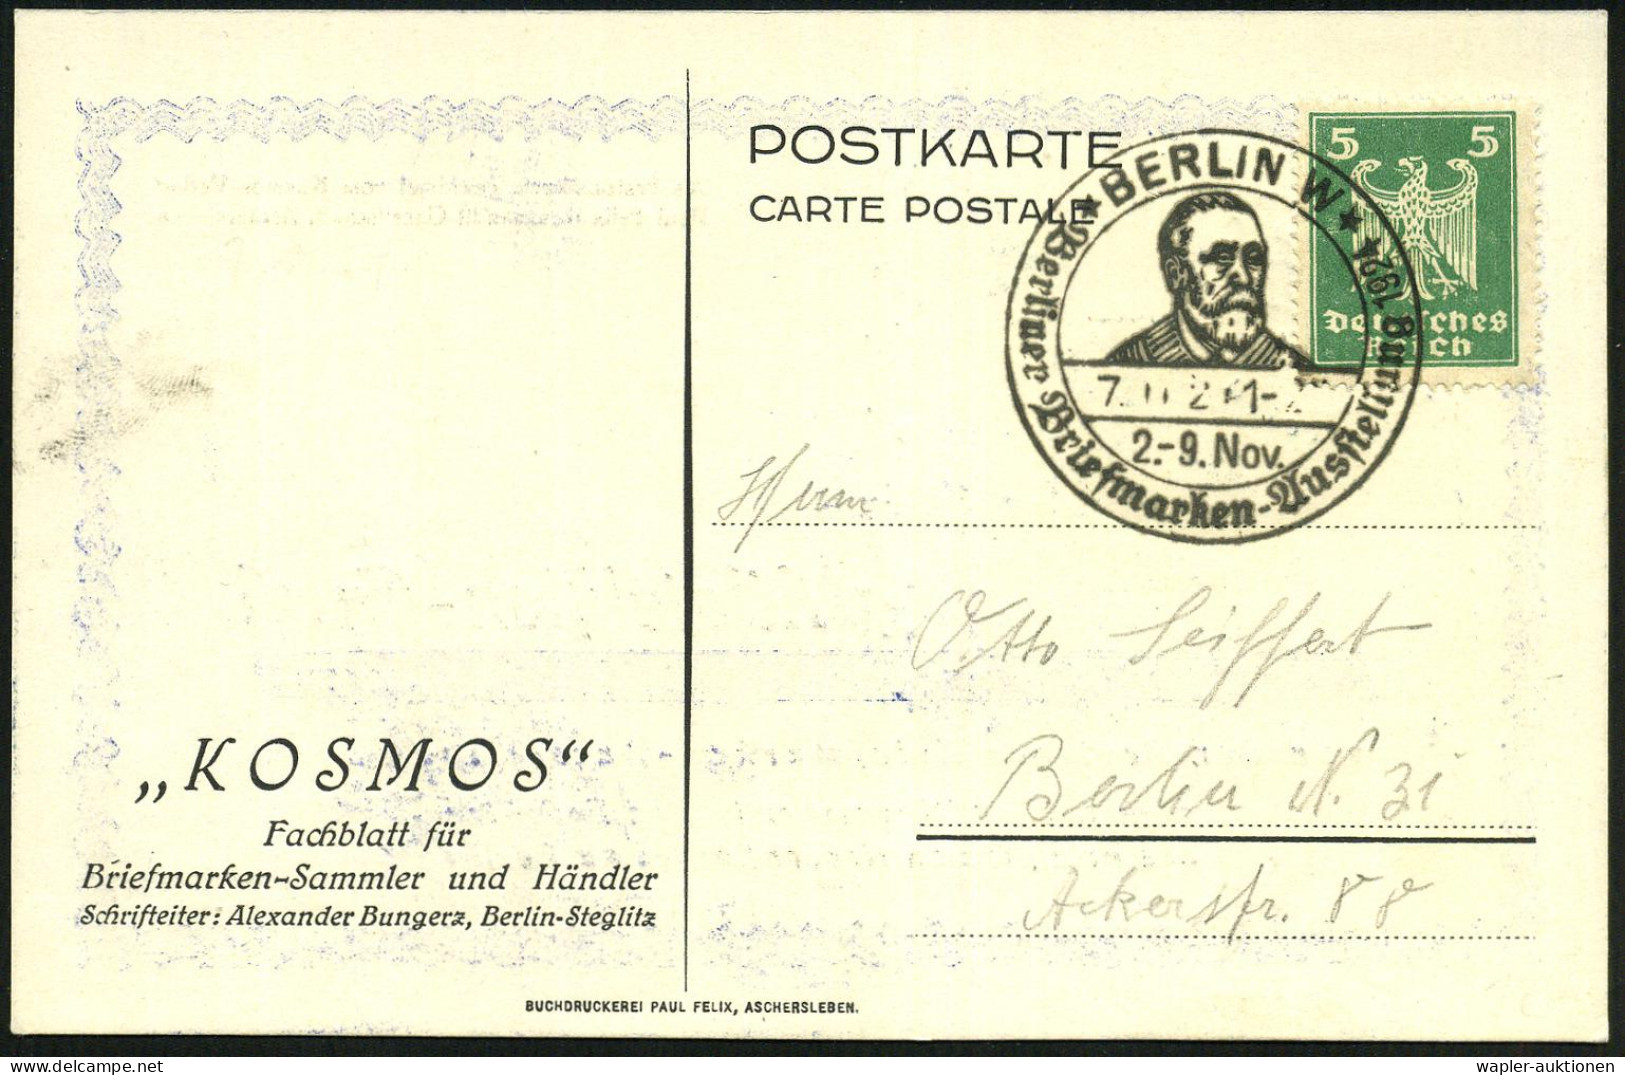 HEINRICH VON STEPHAN & U.P.U.-PIONIERE - HEINRICH VON STEPHAN & U.P.U. PIONEERS - HEINRICH VON STEPHAN & PIONNIER DE L'U - UPU (Universal Postal Union)